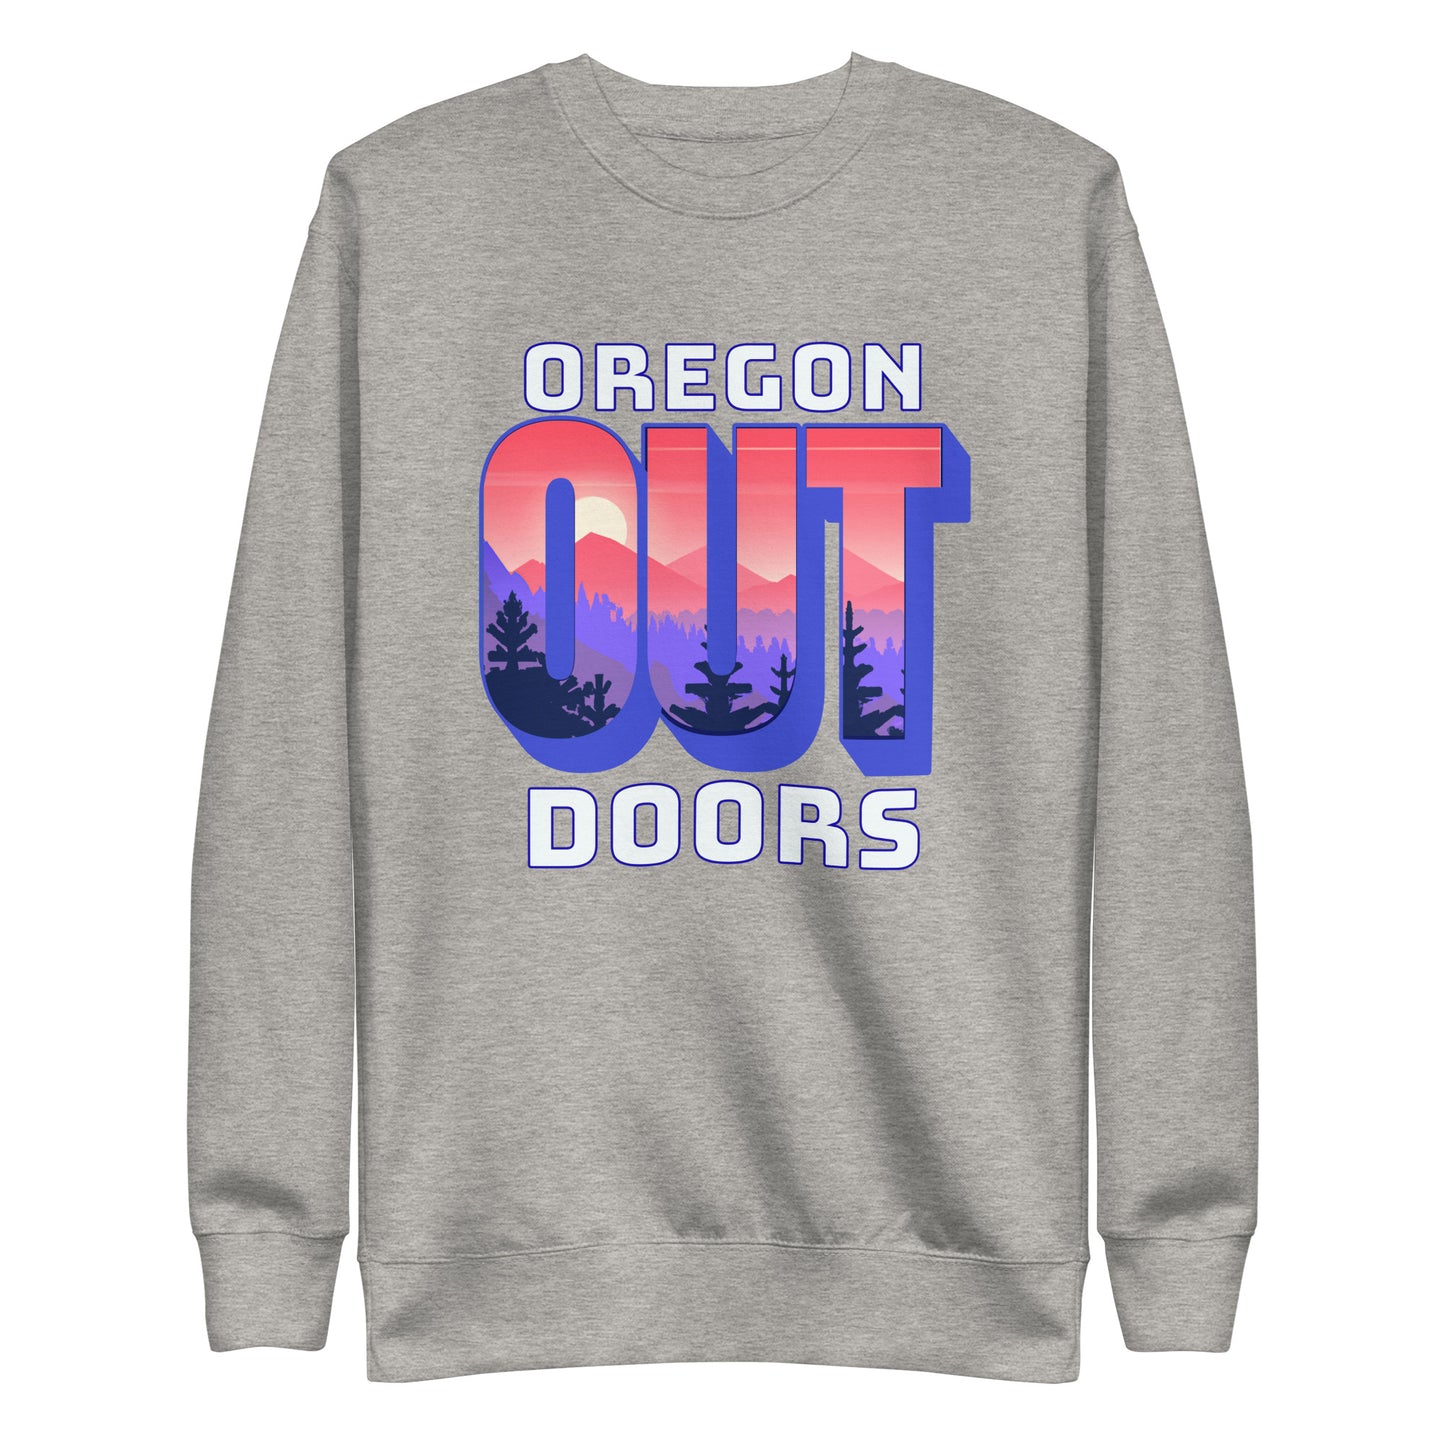 Oregon Out Doors - Unisex Premium Sweatshirt